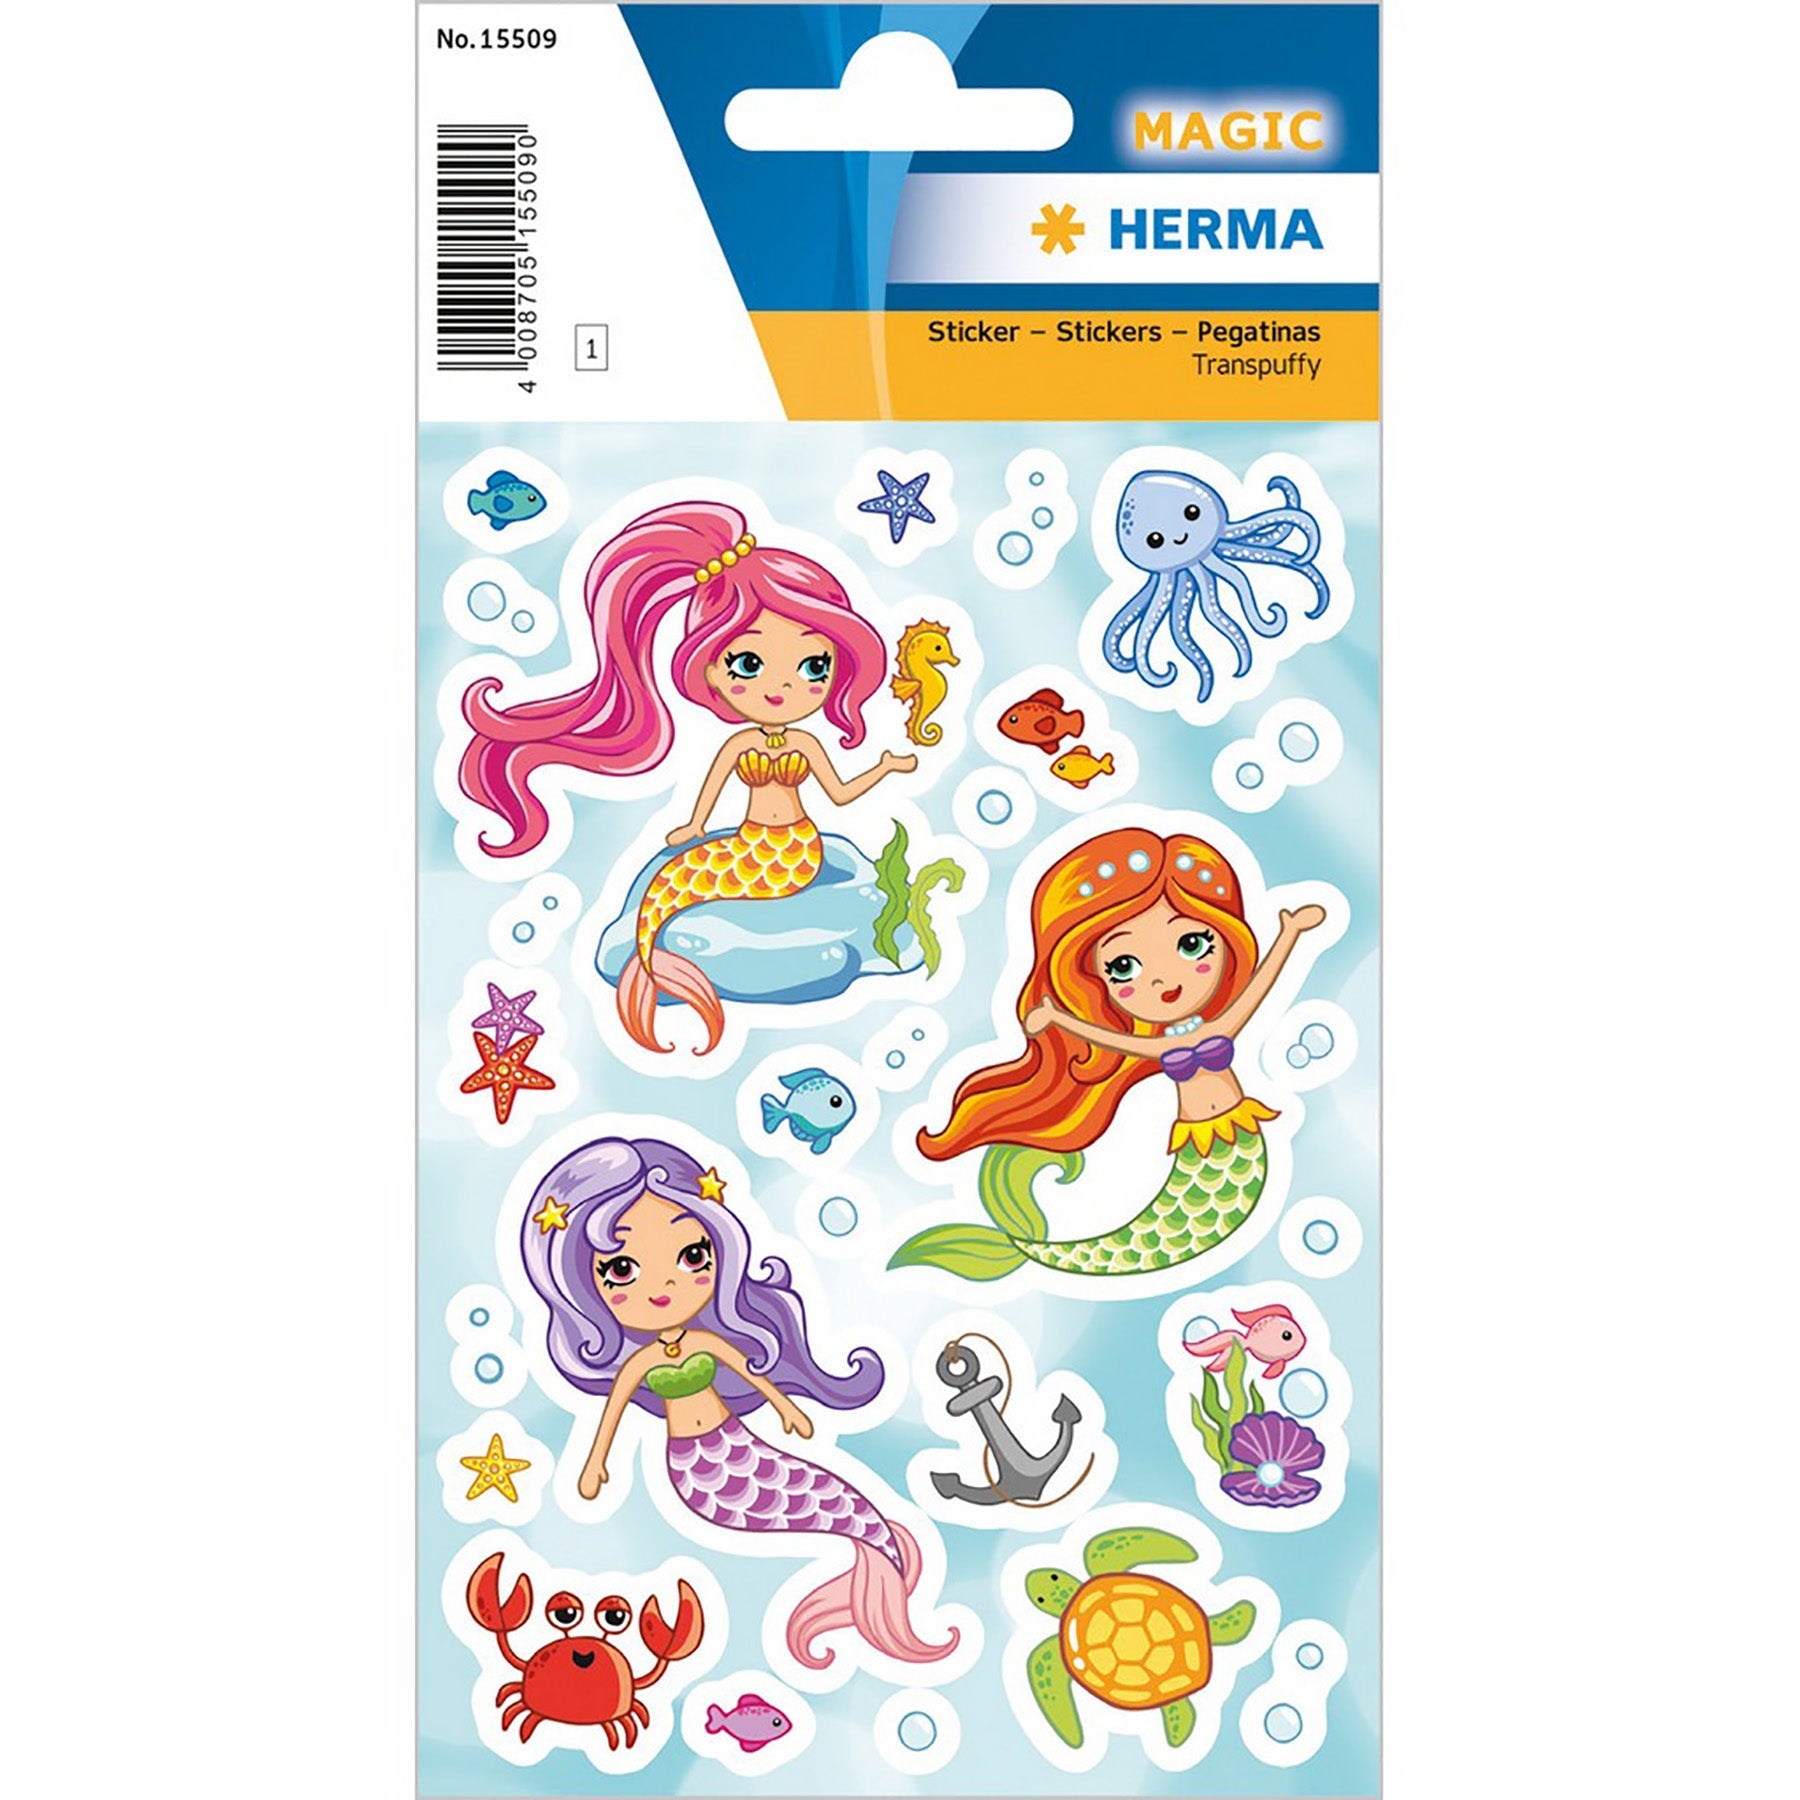 Herma Magic Stickers Little Mermaid Transpuffy 4.75x3.1in Sheet